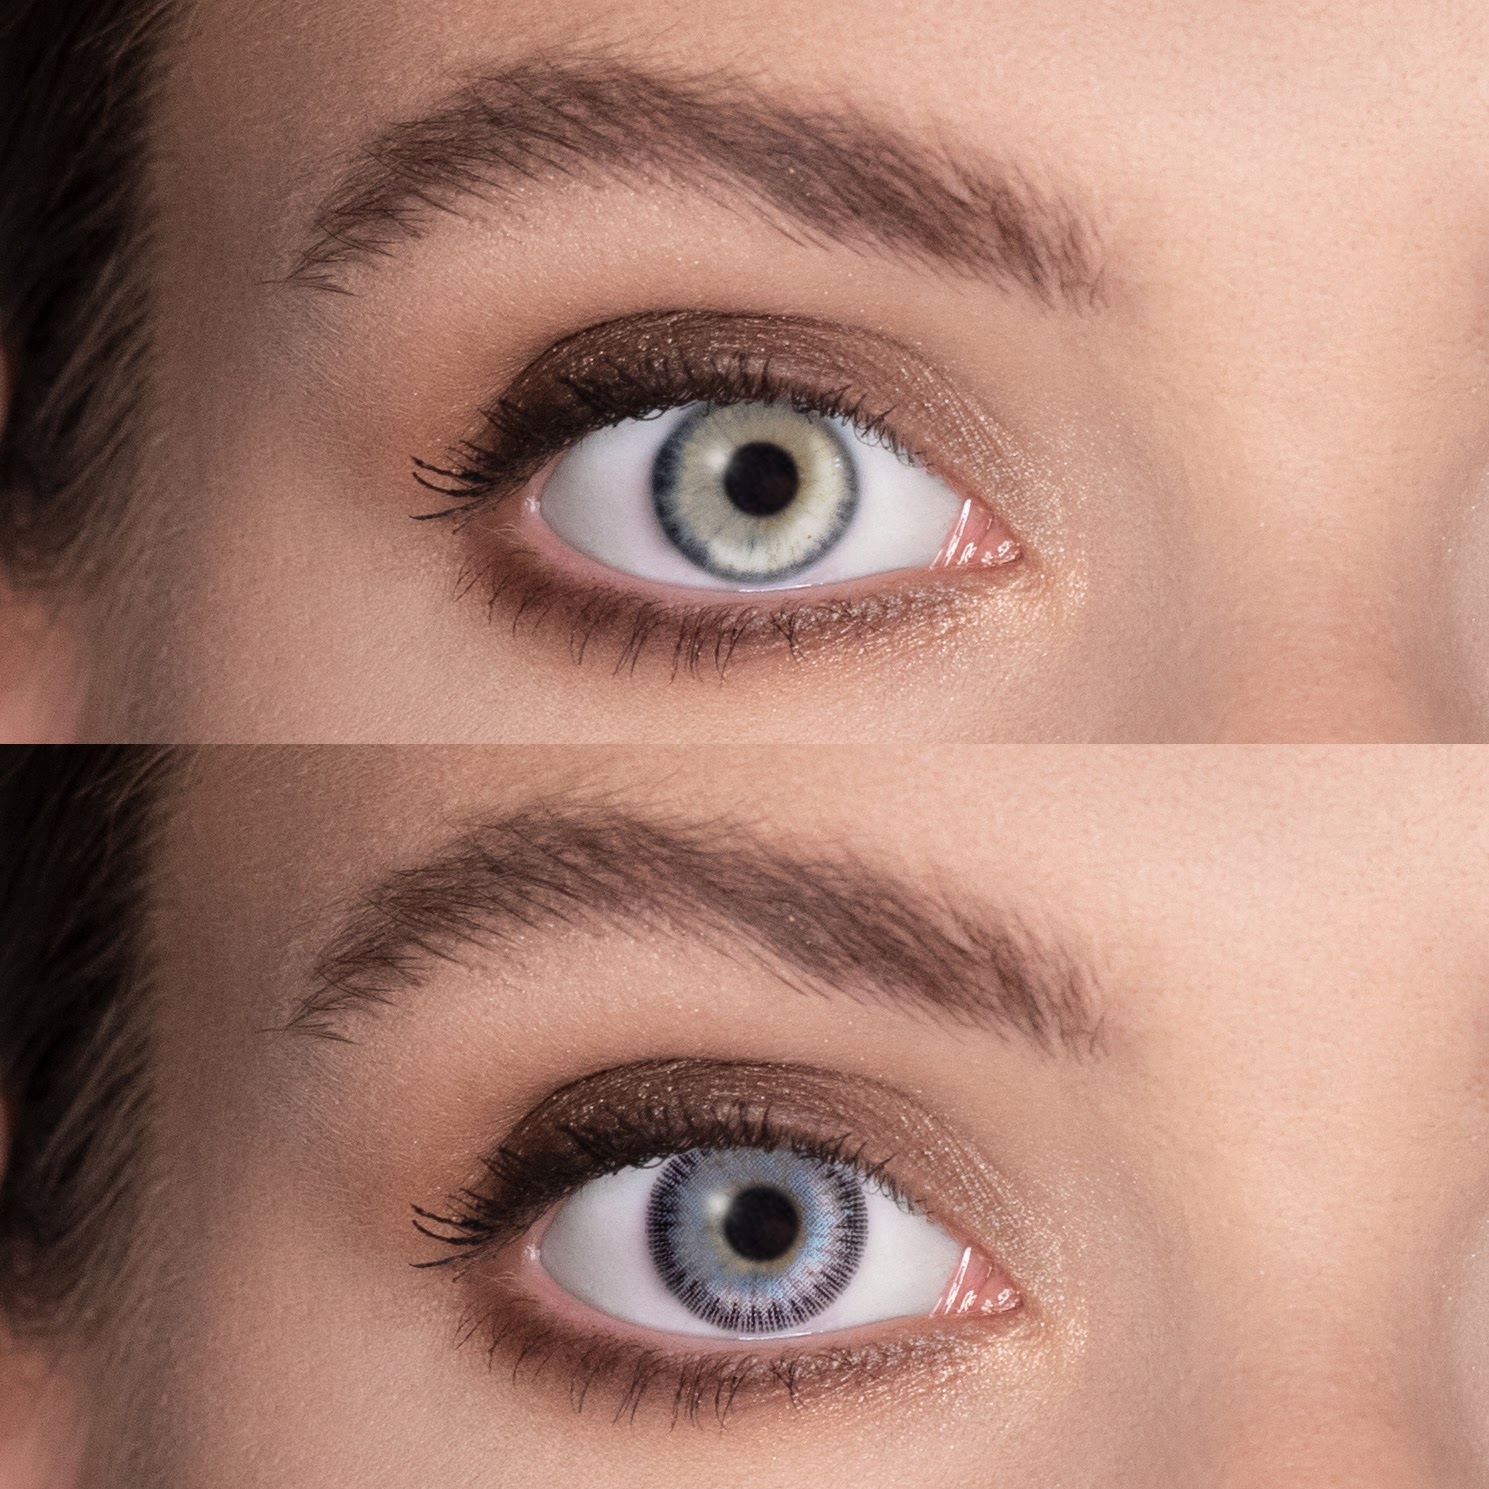 lentile colorate pentru ochi albastri fusion blue gray de la videt